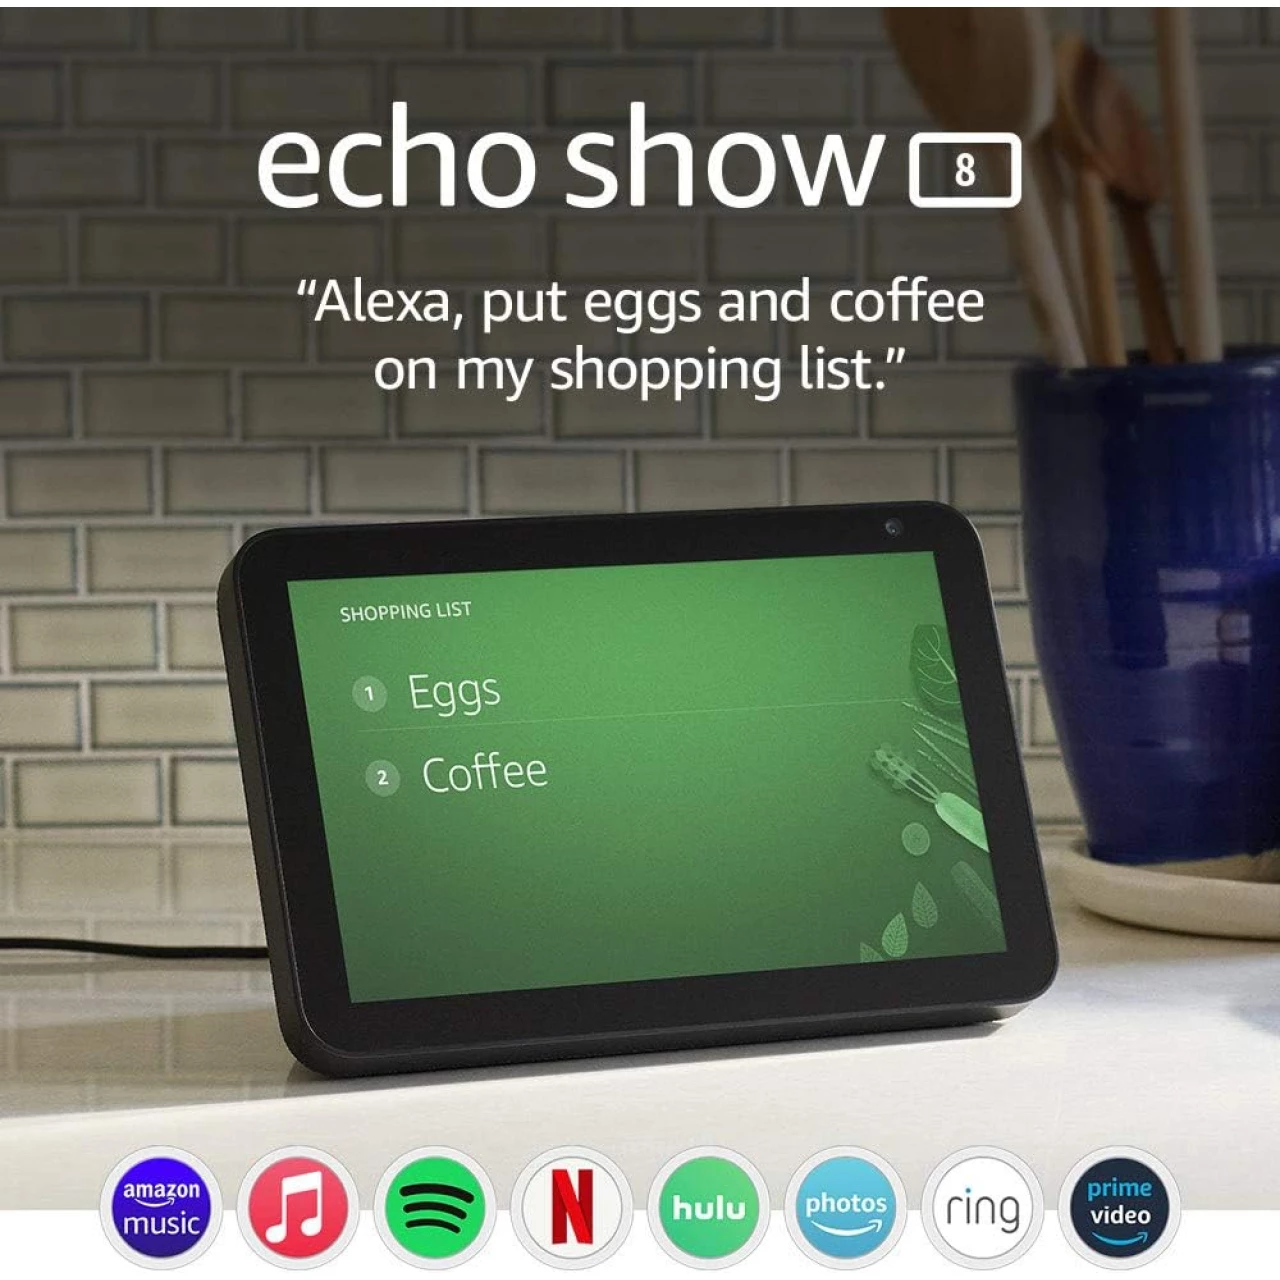 Echo Show 8 (1st Gen, 2019 release) &ndash; HD smart display with Alexa - Unlimited Cloud Photo Storage - Digital Photo Display - Charcoal